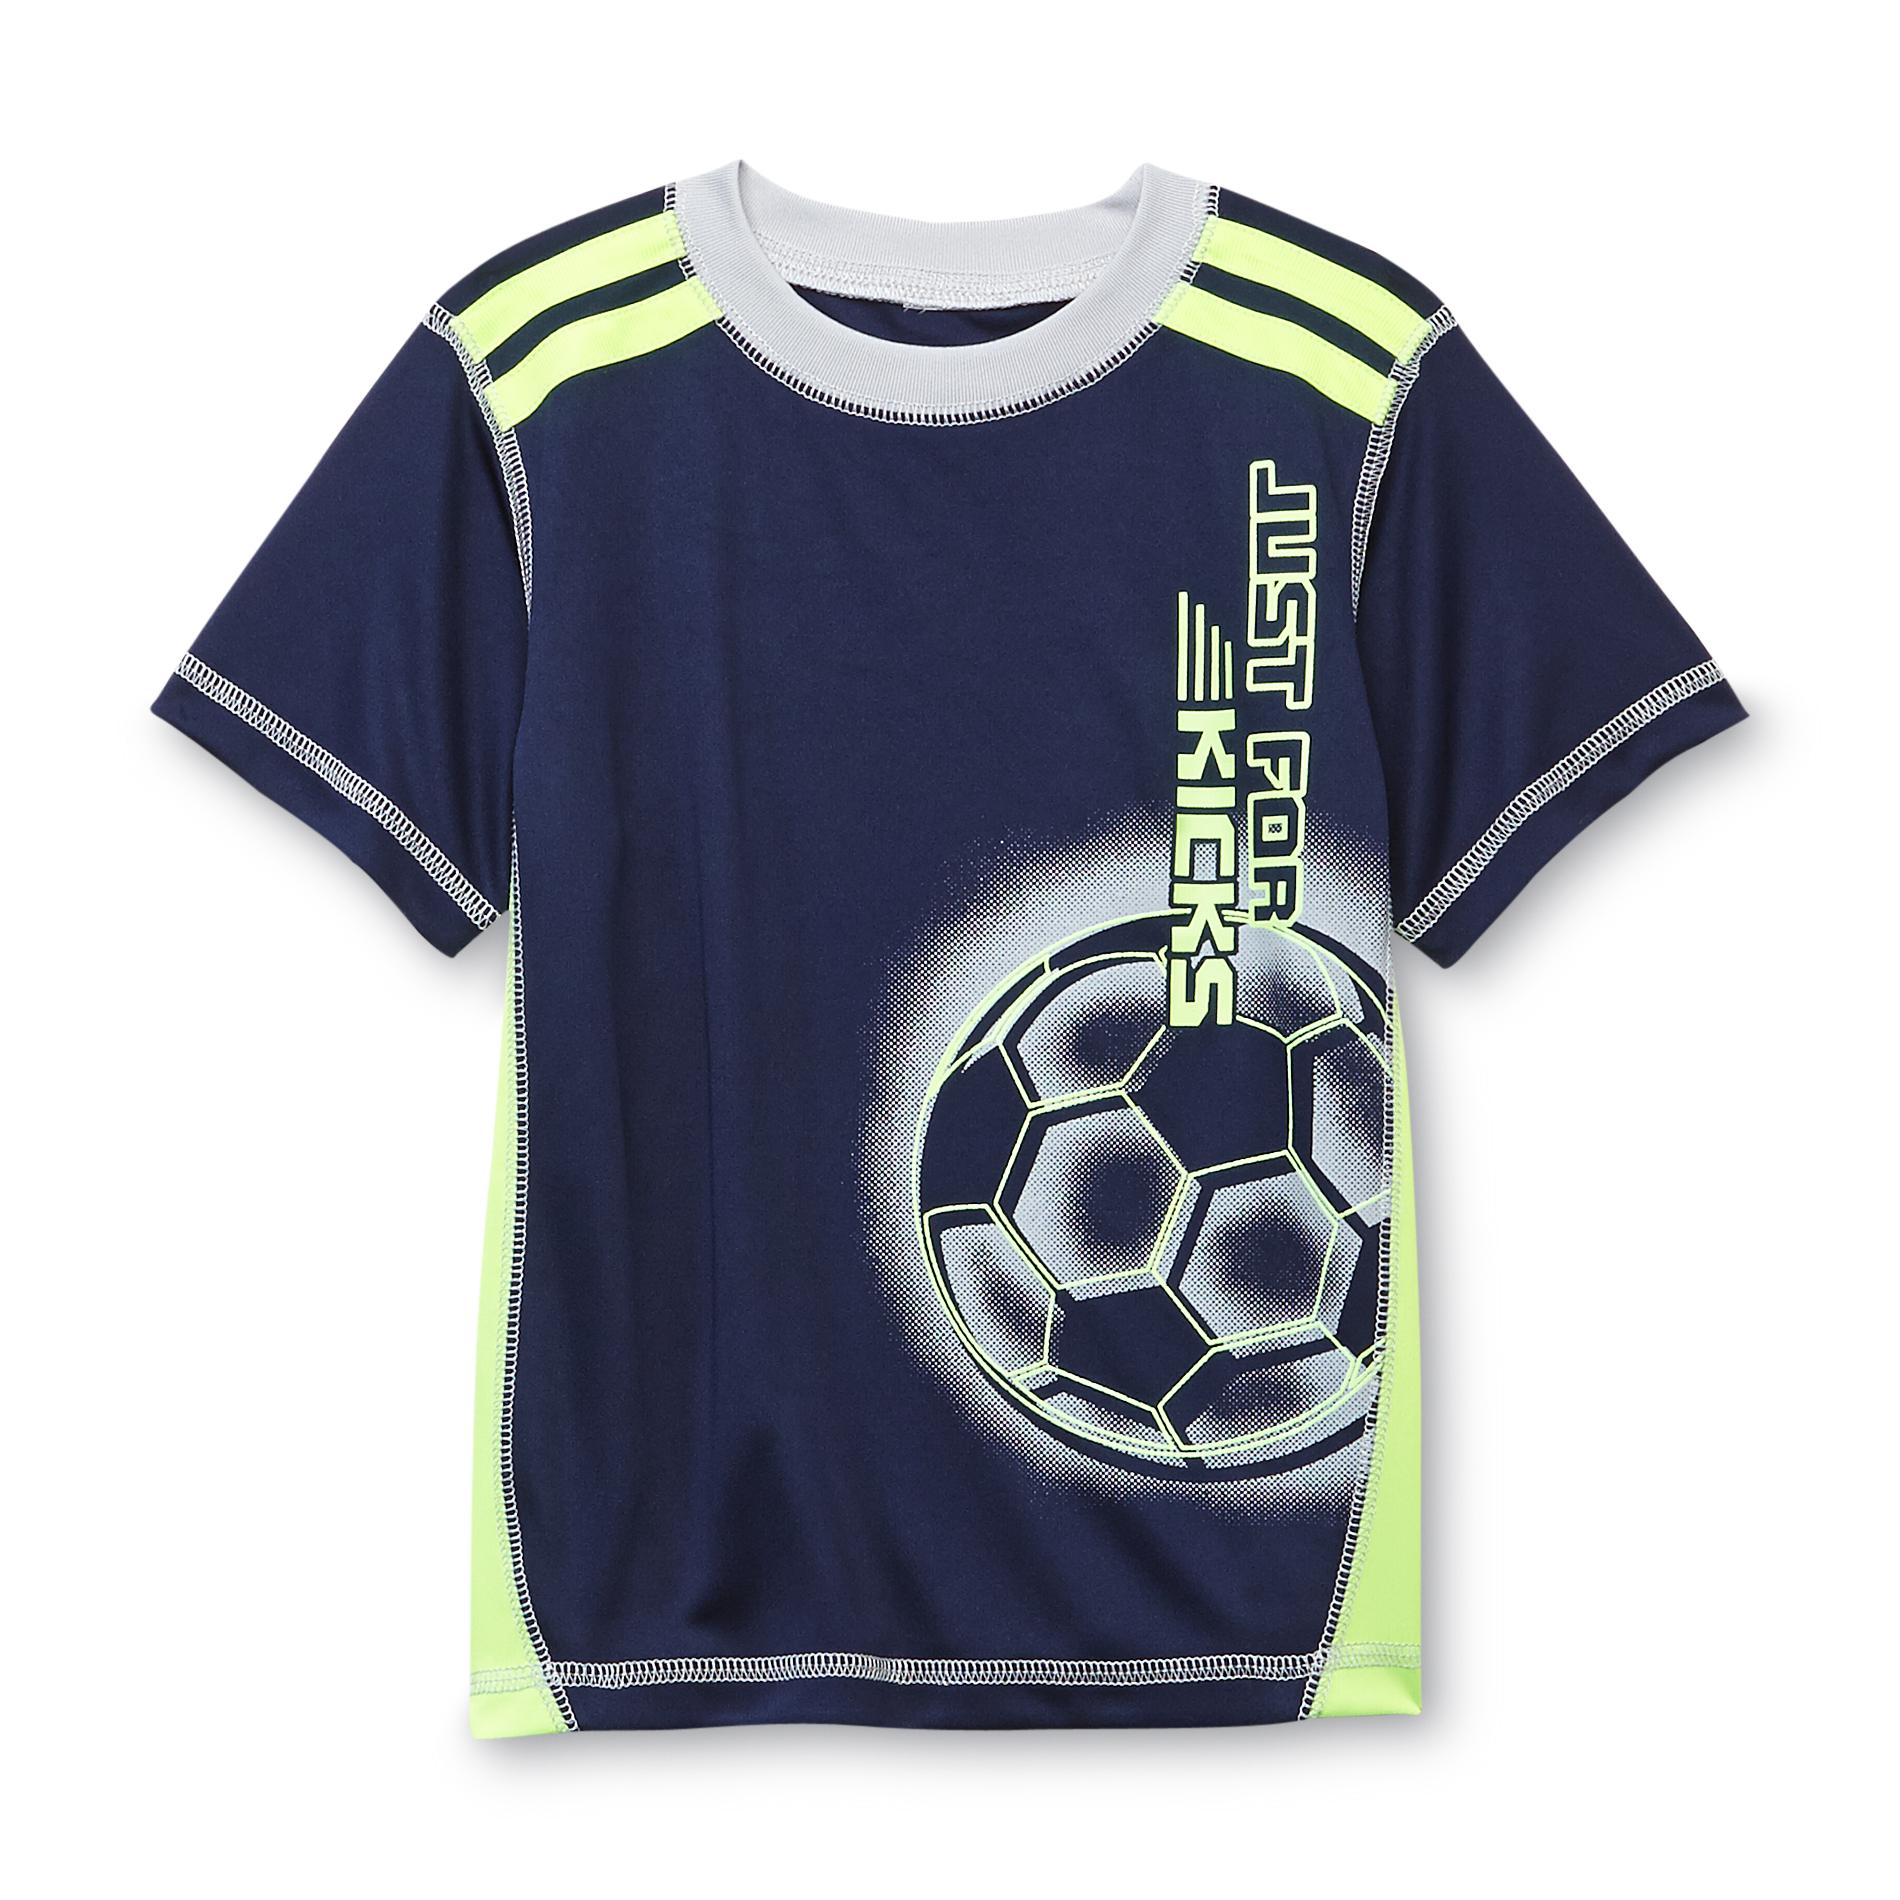 WonderKids Toddler Boy's Athletic T-Shirt - Soccer